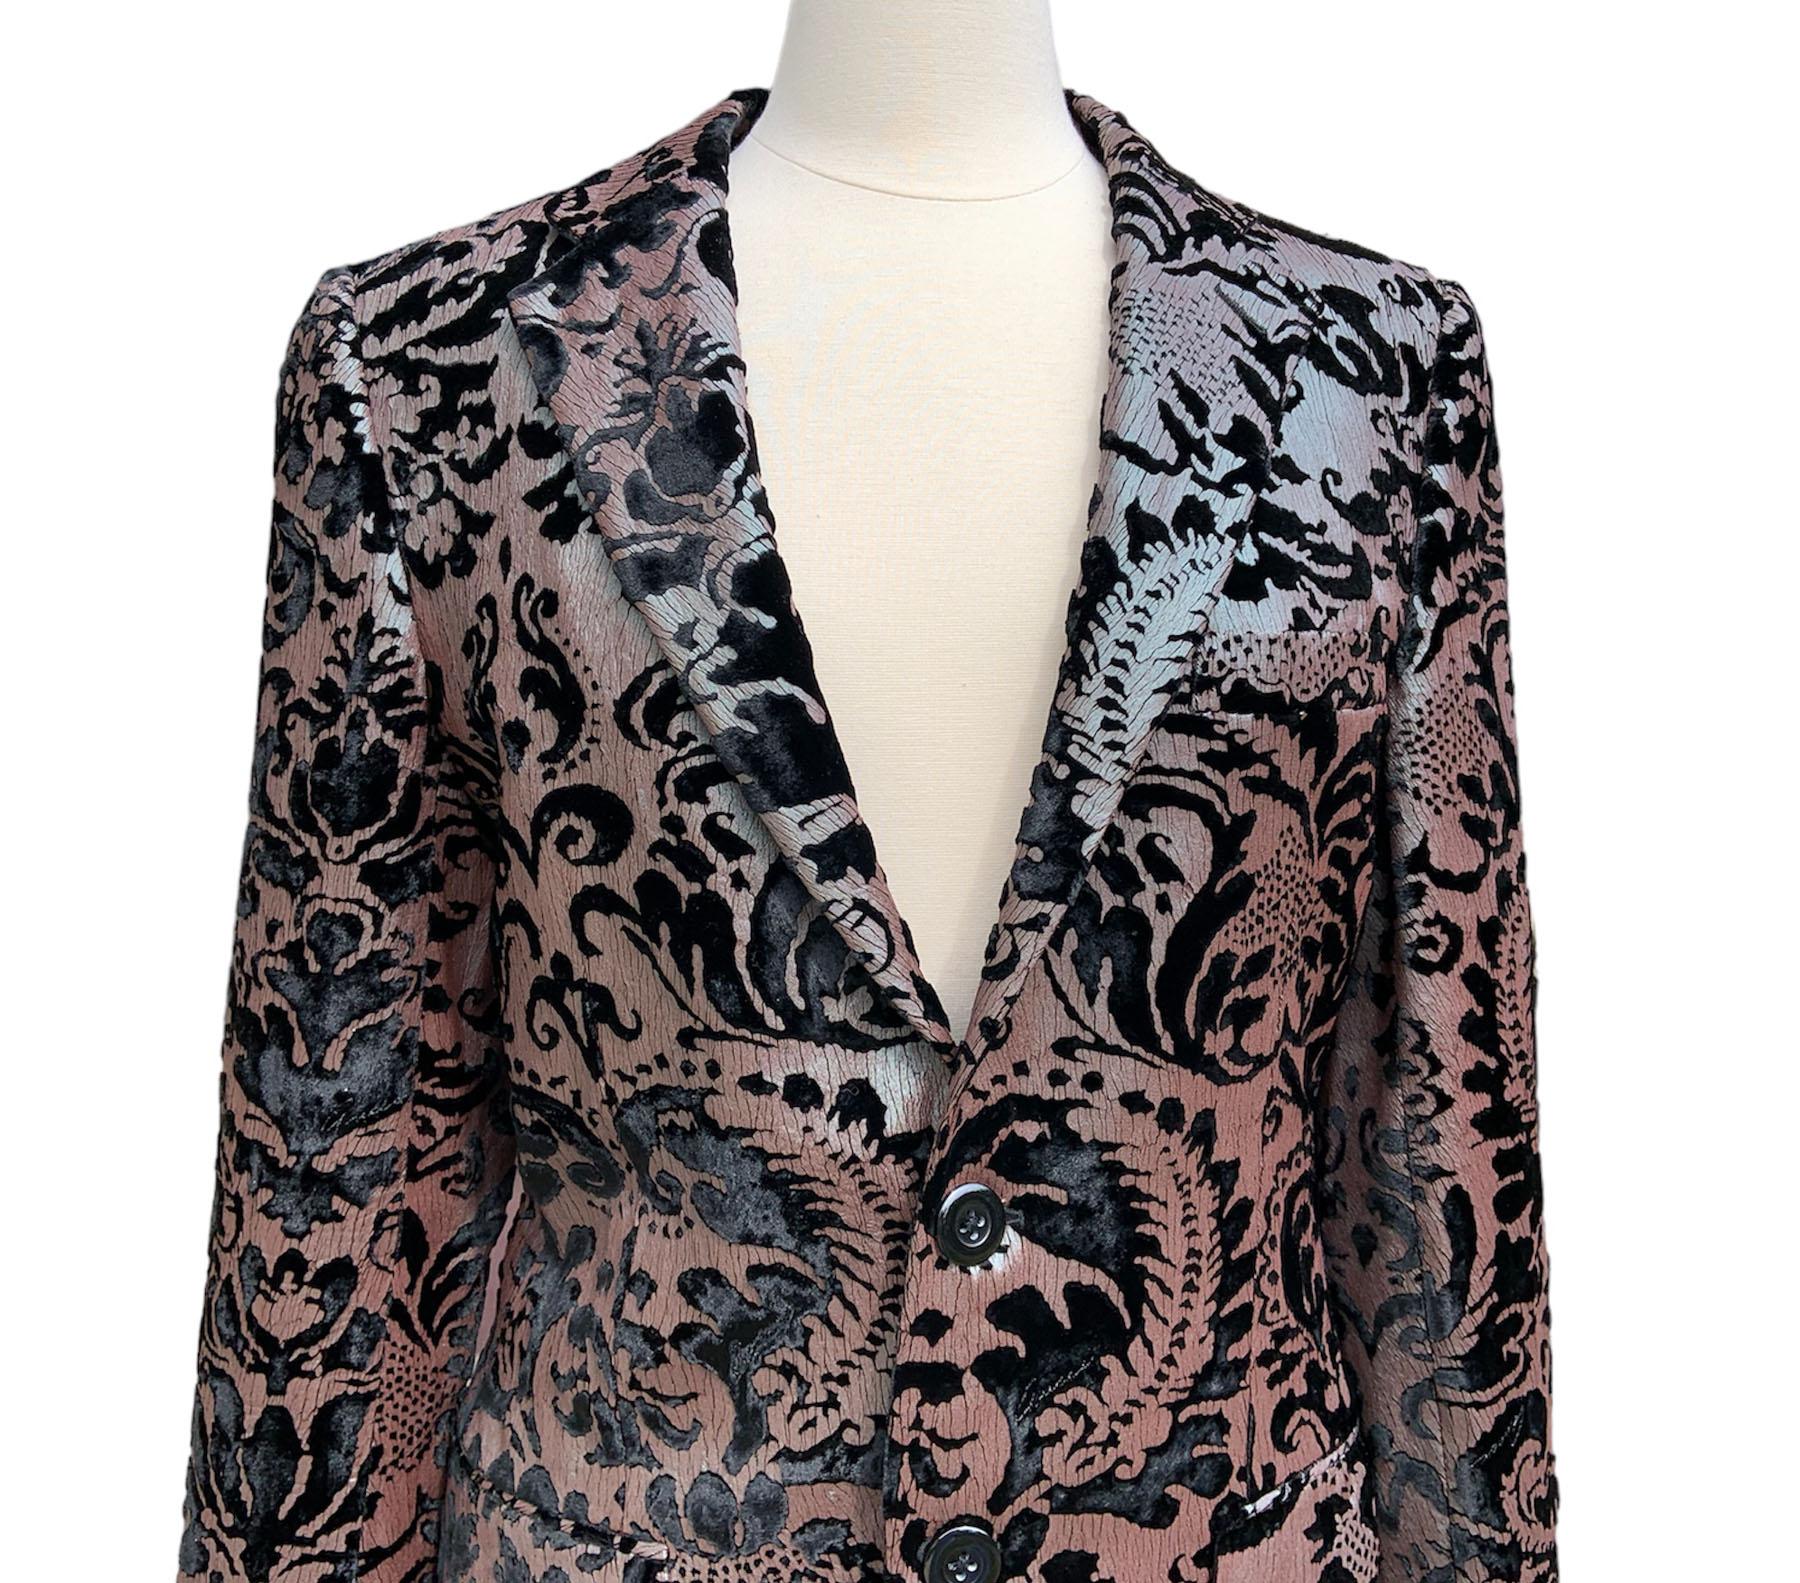 Tom Ford for Gucci SS 2000 Gothic Damask Iridescent Paint Velvet Blazer 48 US 38 For Sale 4